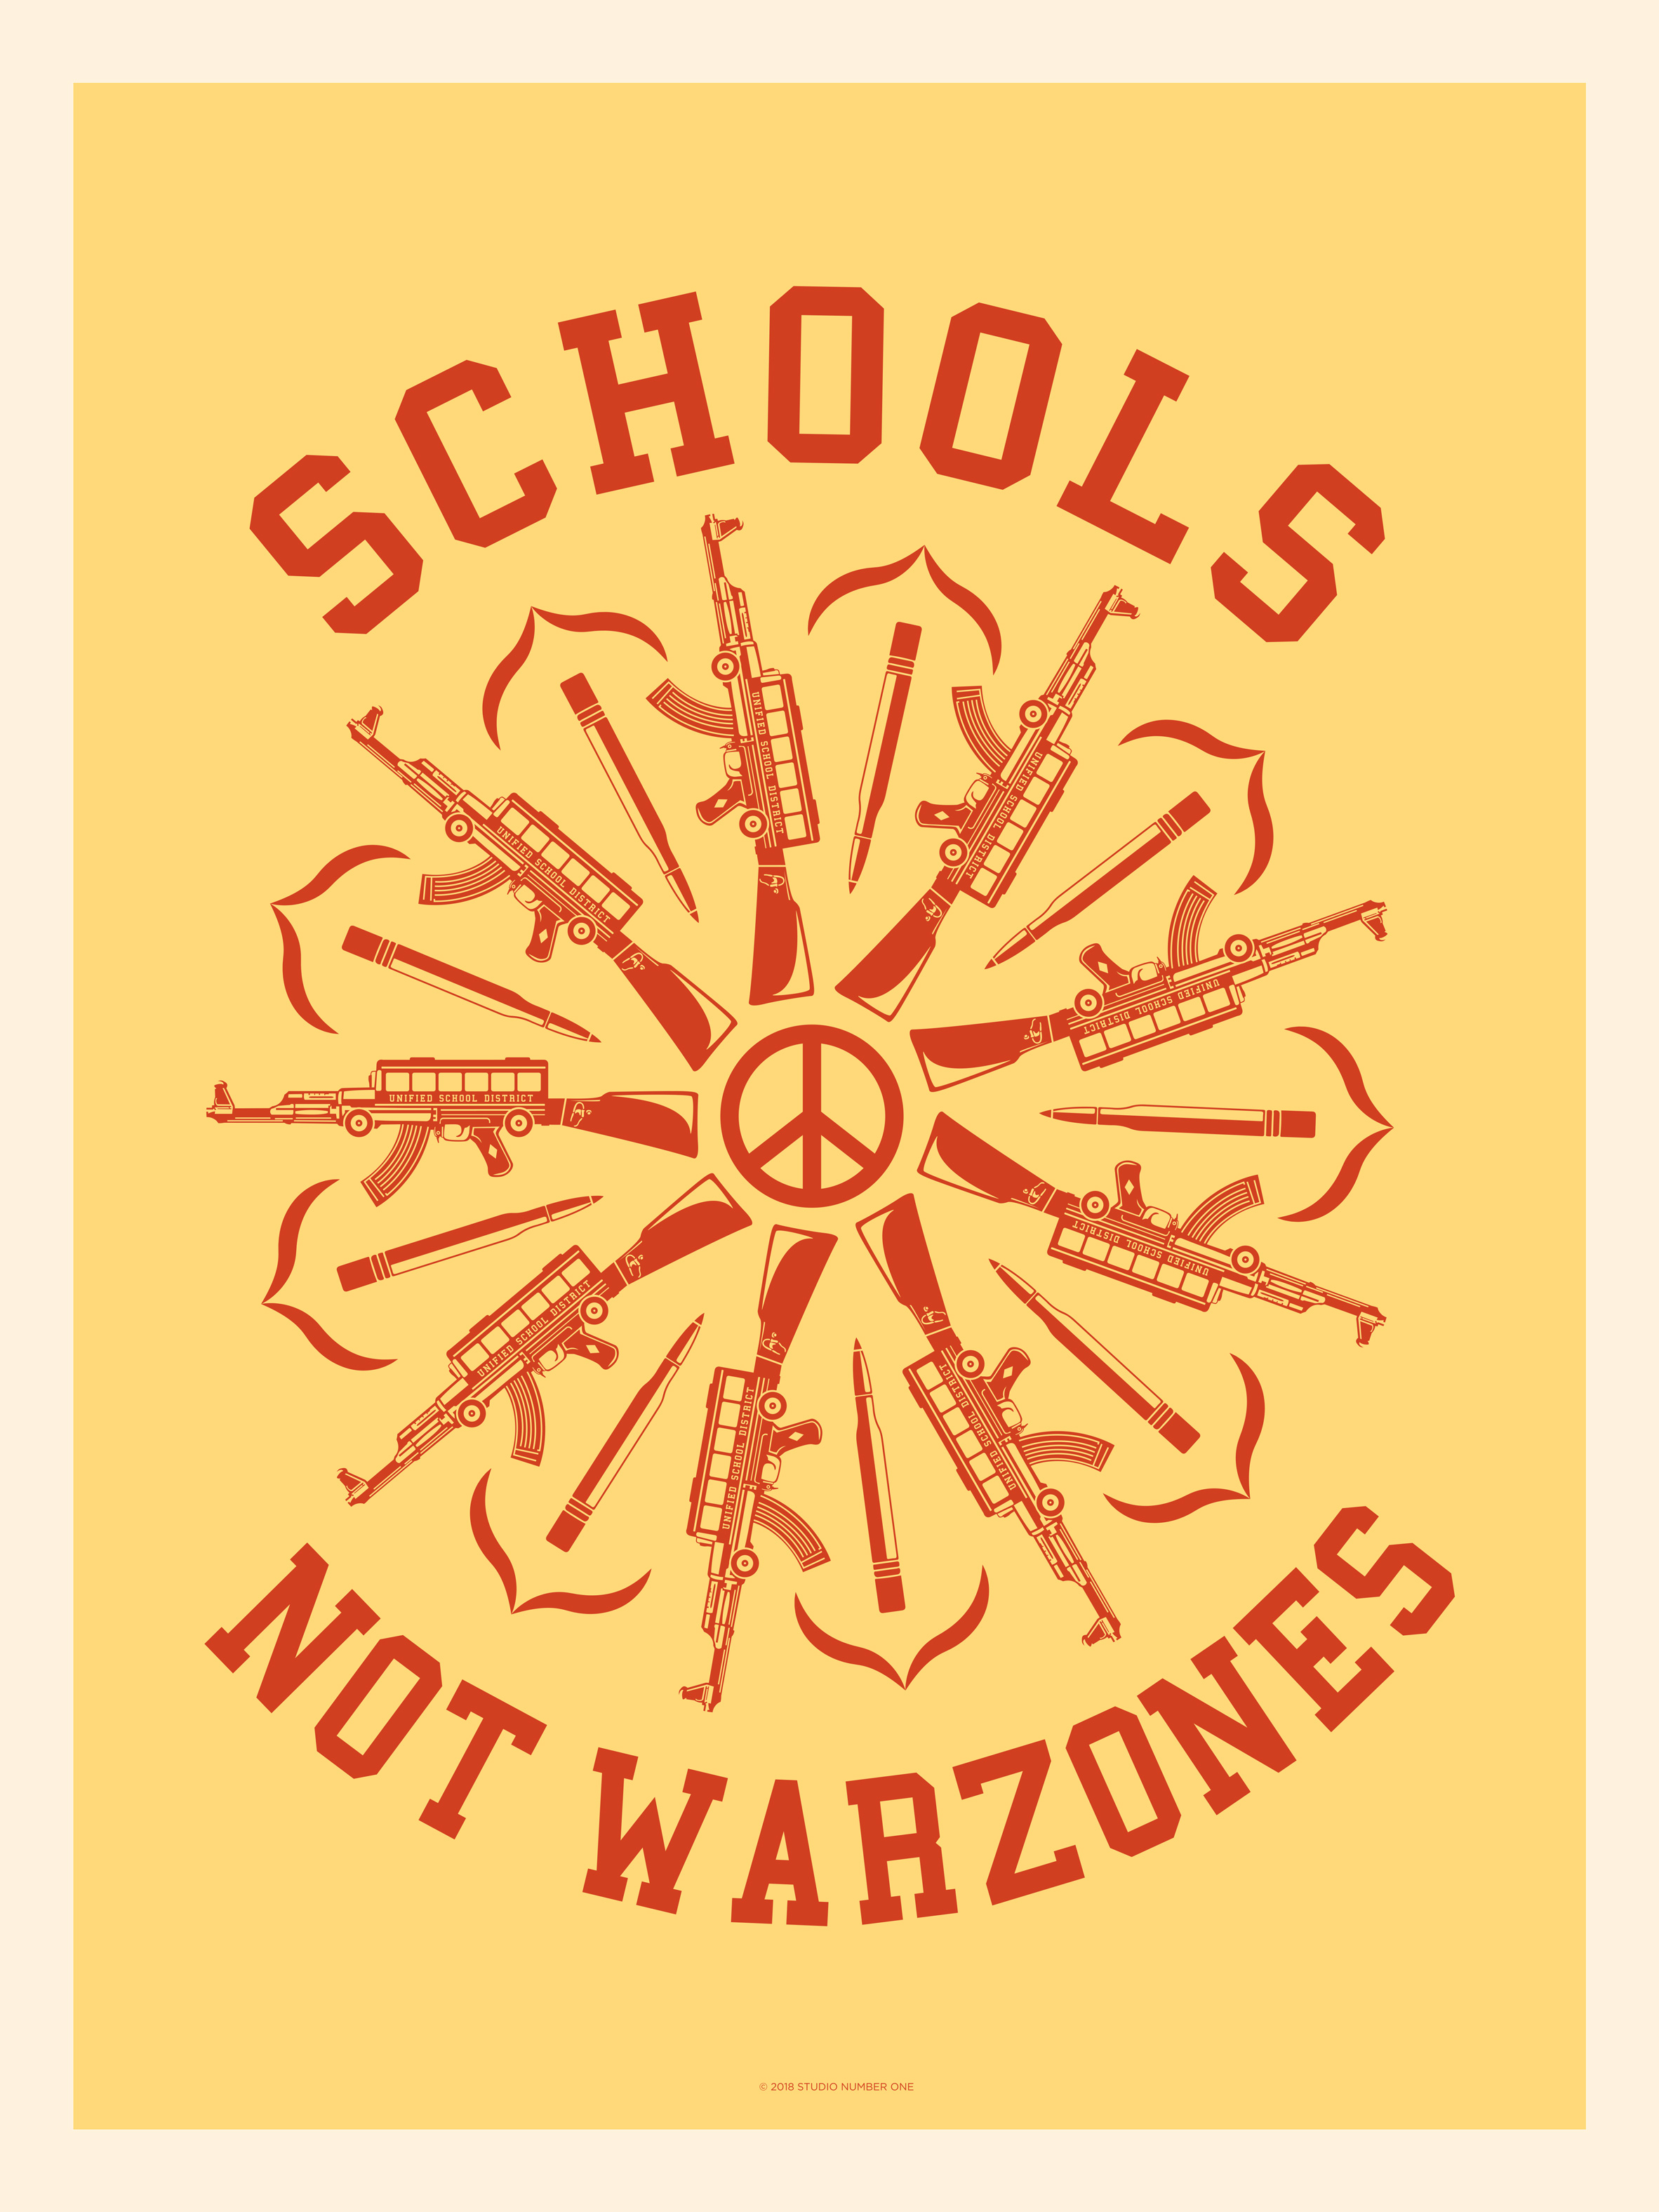 Shepard Fairey creates posters to protest school gun violence